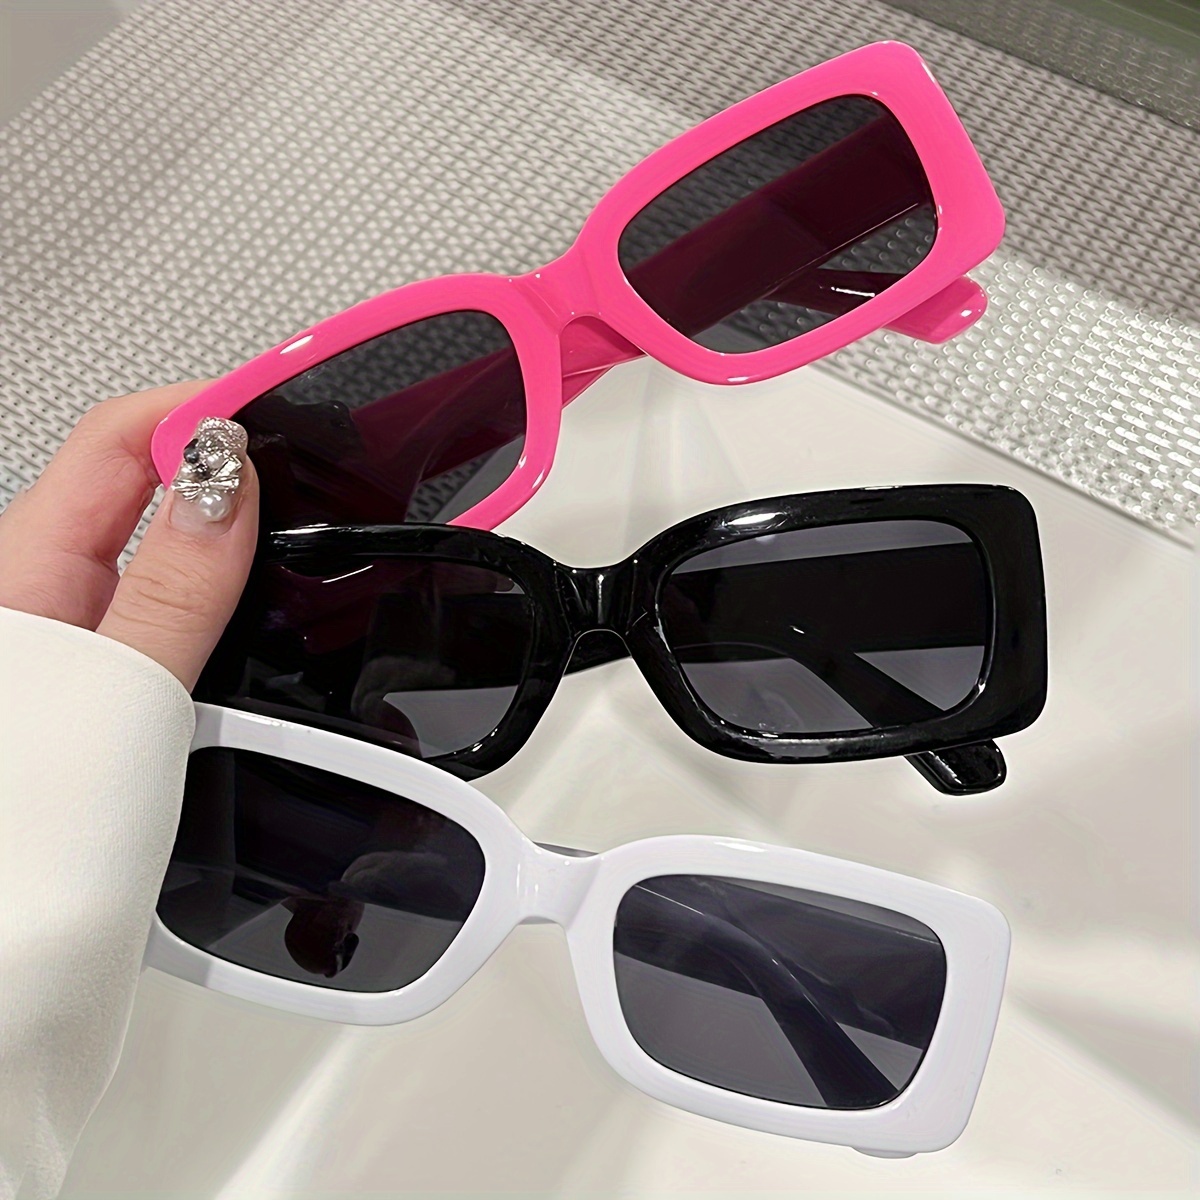 

3pcs Large Square Fashion Glasses For Women Men Anti Glare Sun Shades Glasses For Driving Beach Travel